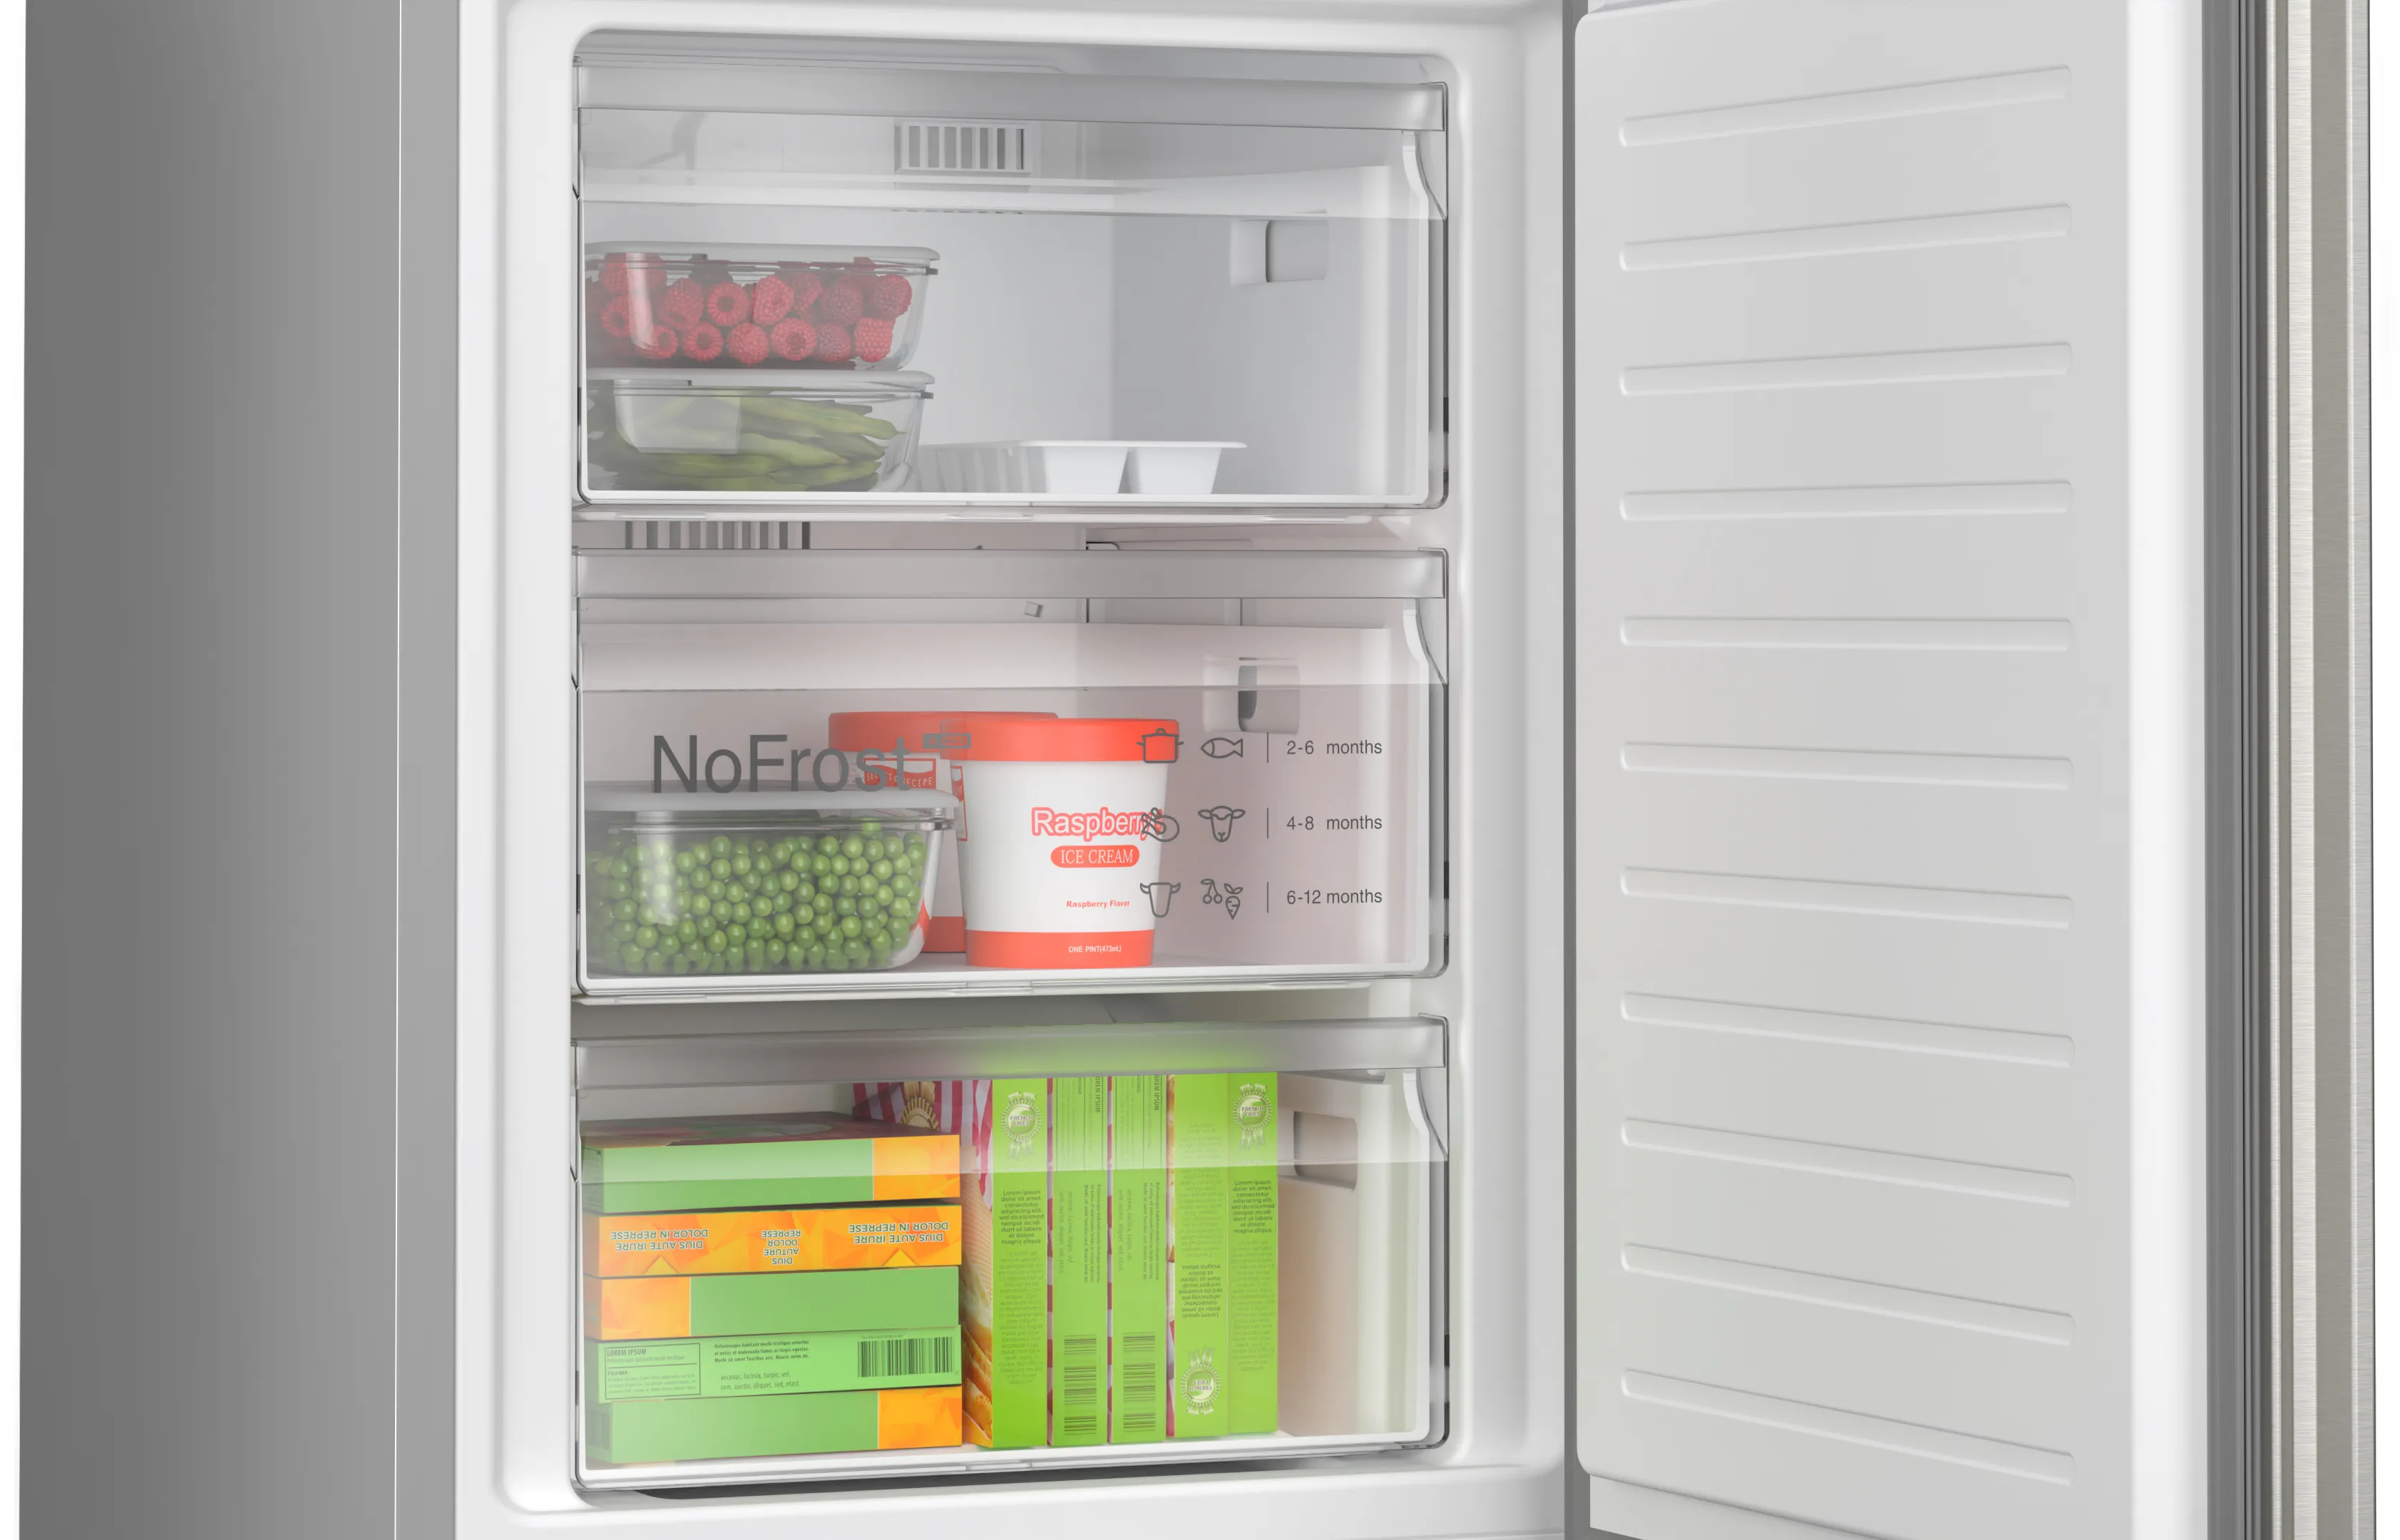 KGN86VIEA free-standing fridge-freezer with freezer at bottom